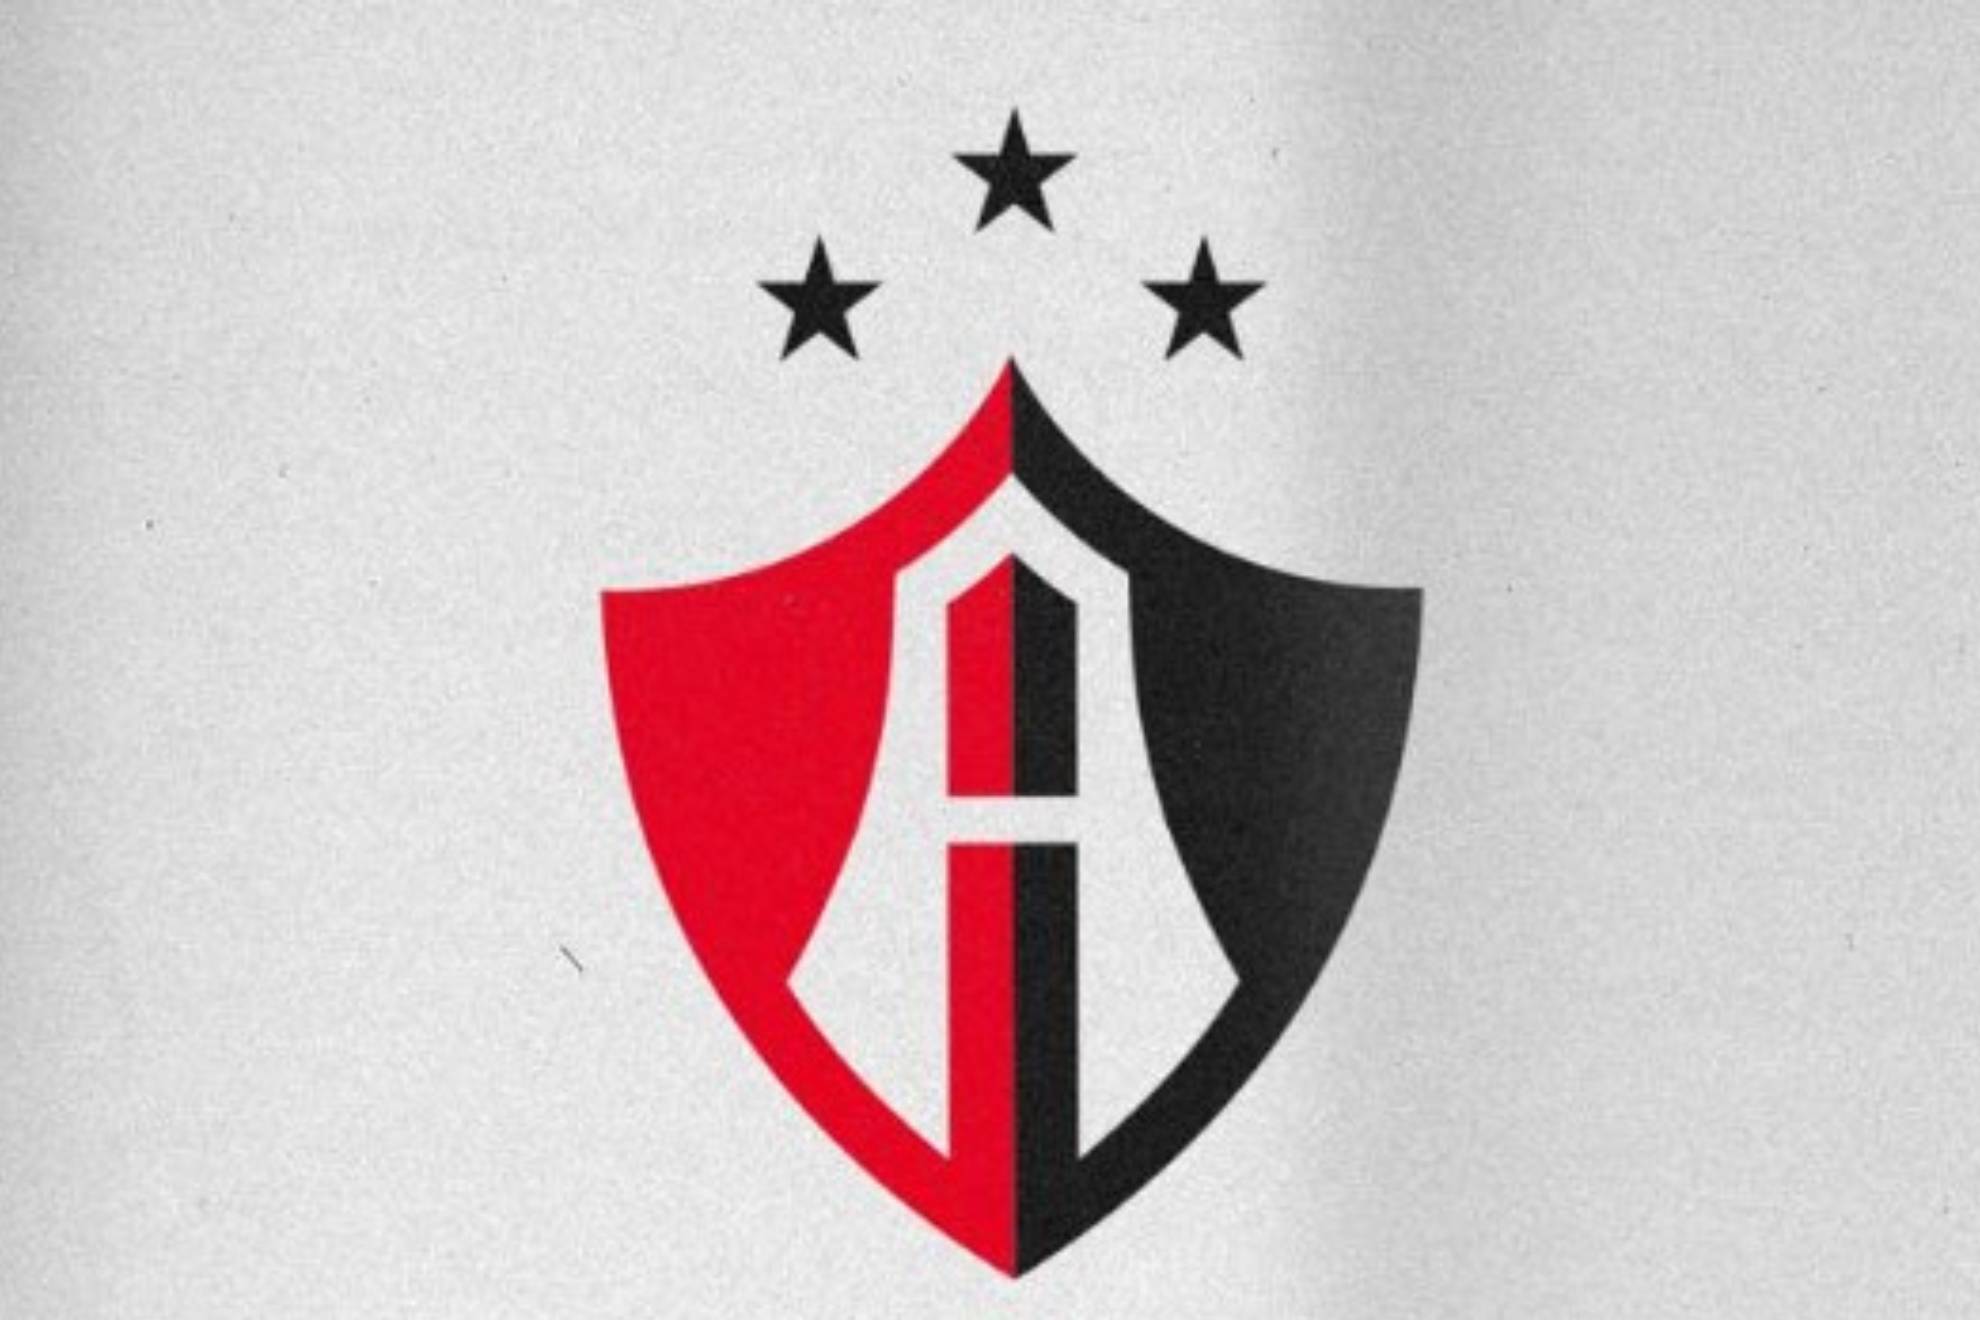 Atlas FC responds to criticizm after quoting Nazi figure Joseph Goebbels